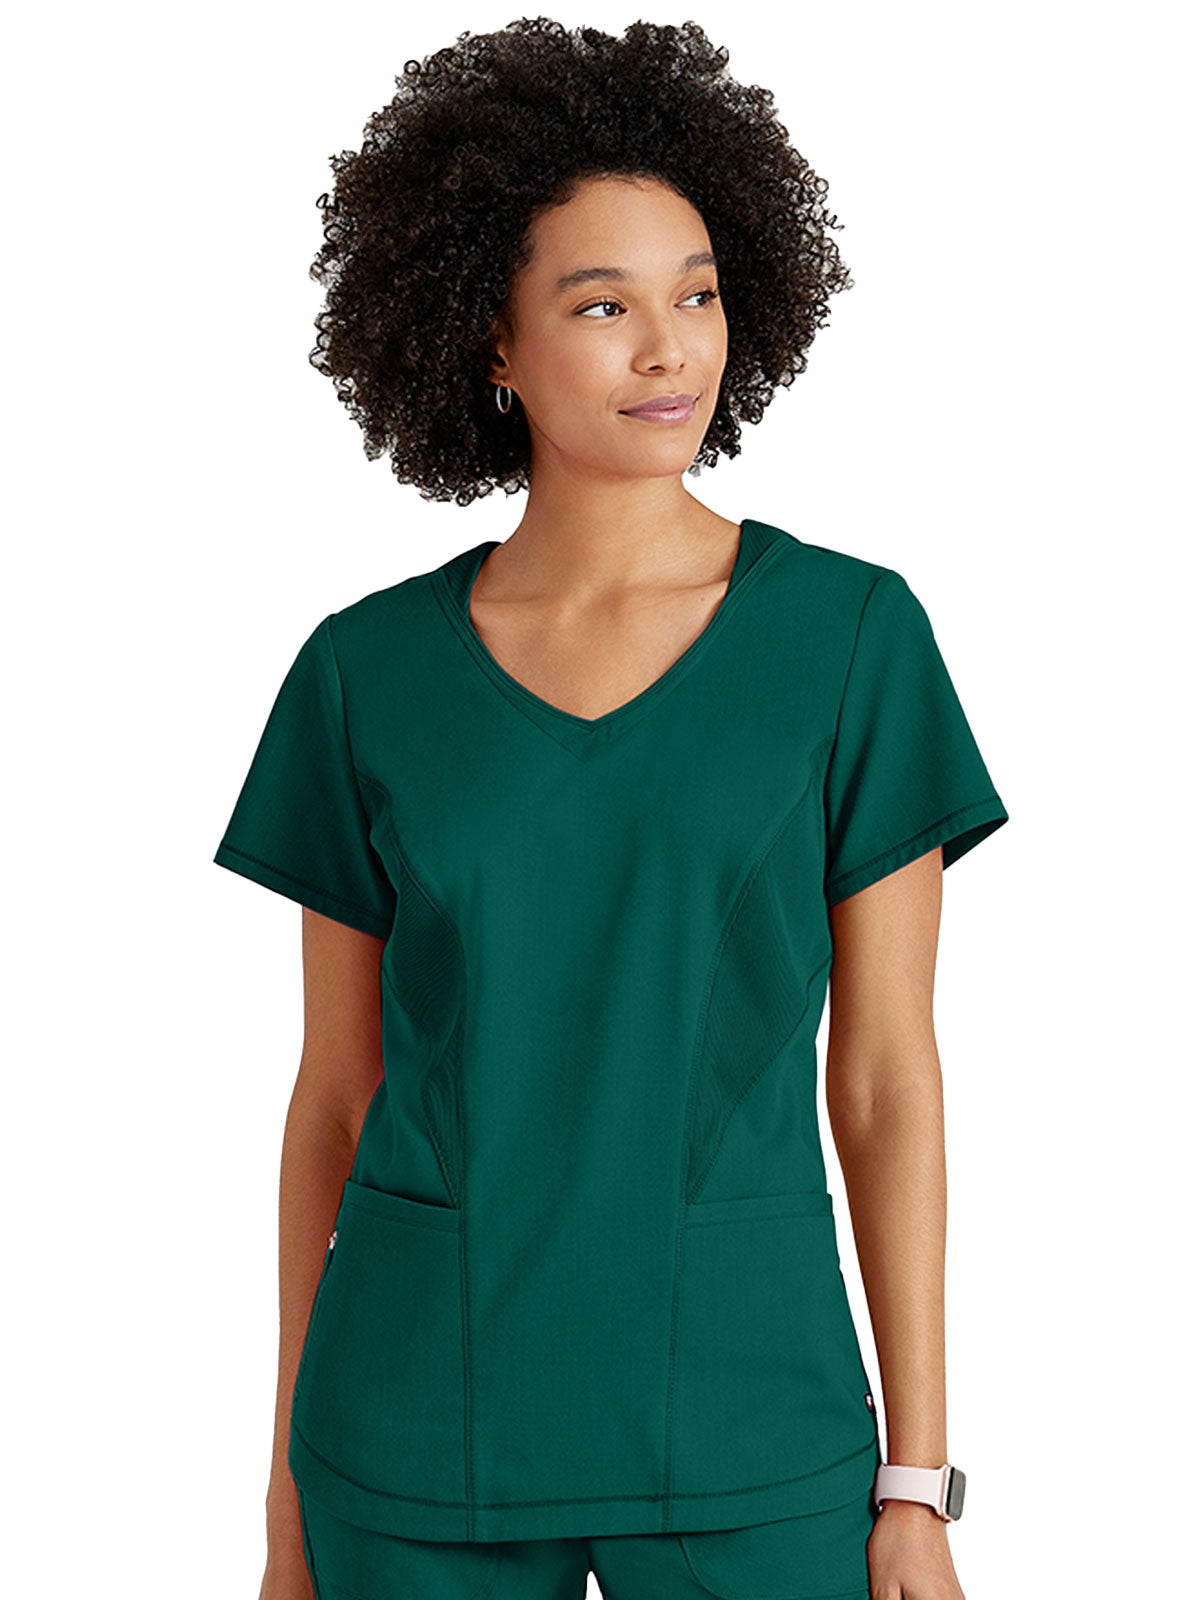 Grey's anatomy scrubs sales Spandex Stretch Women's scrub top. – Scrubs  Uniforms